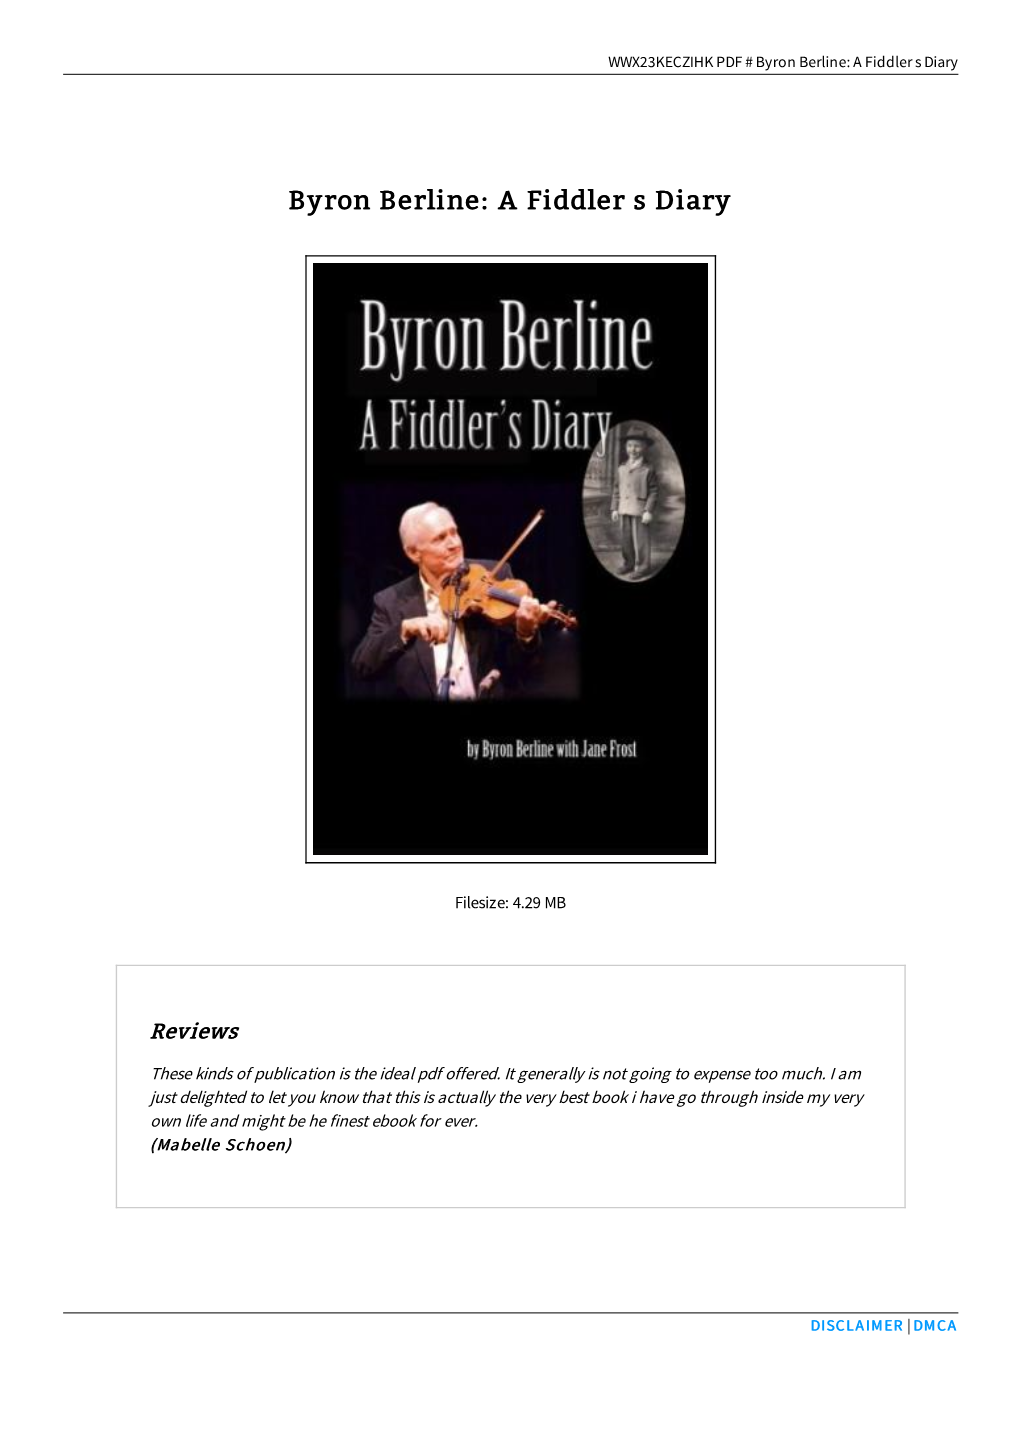 Byron Berline: a Fiddler S Diary